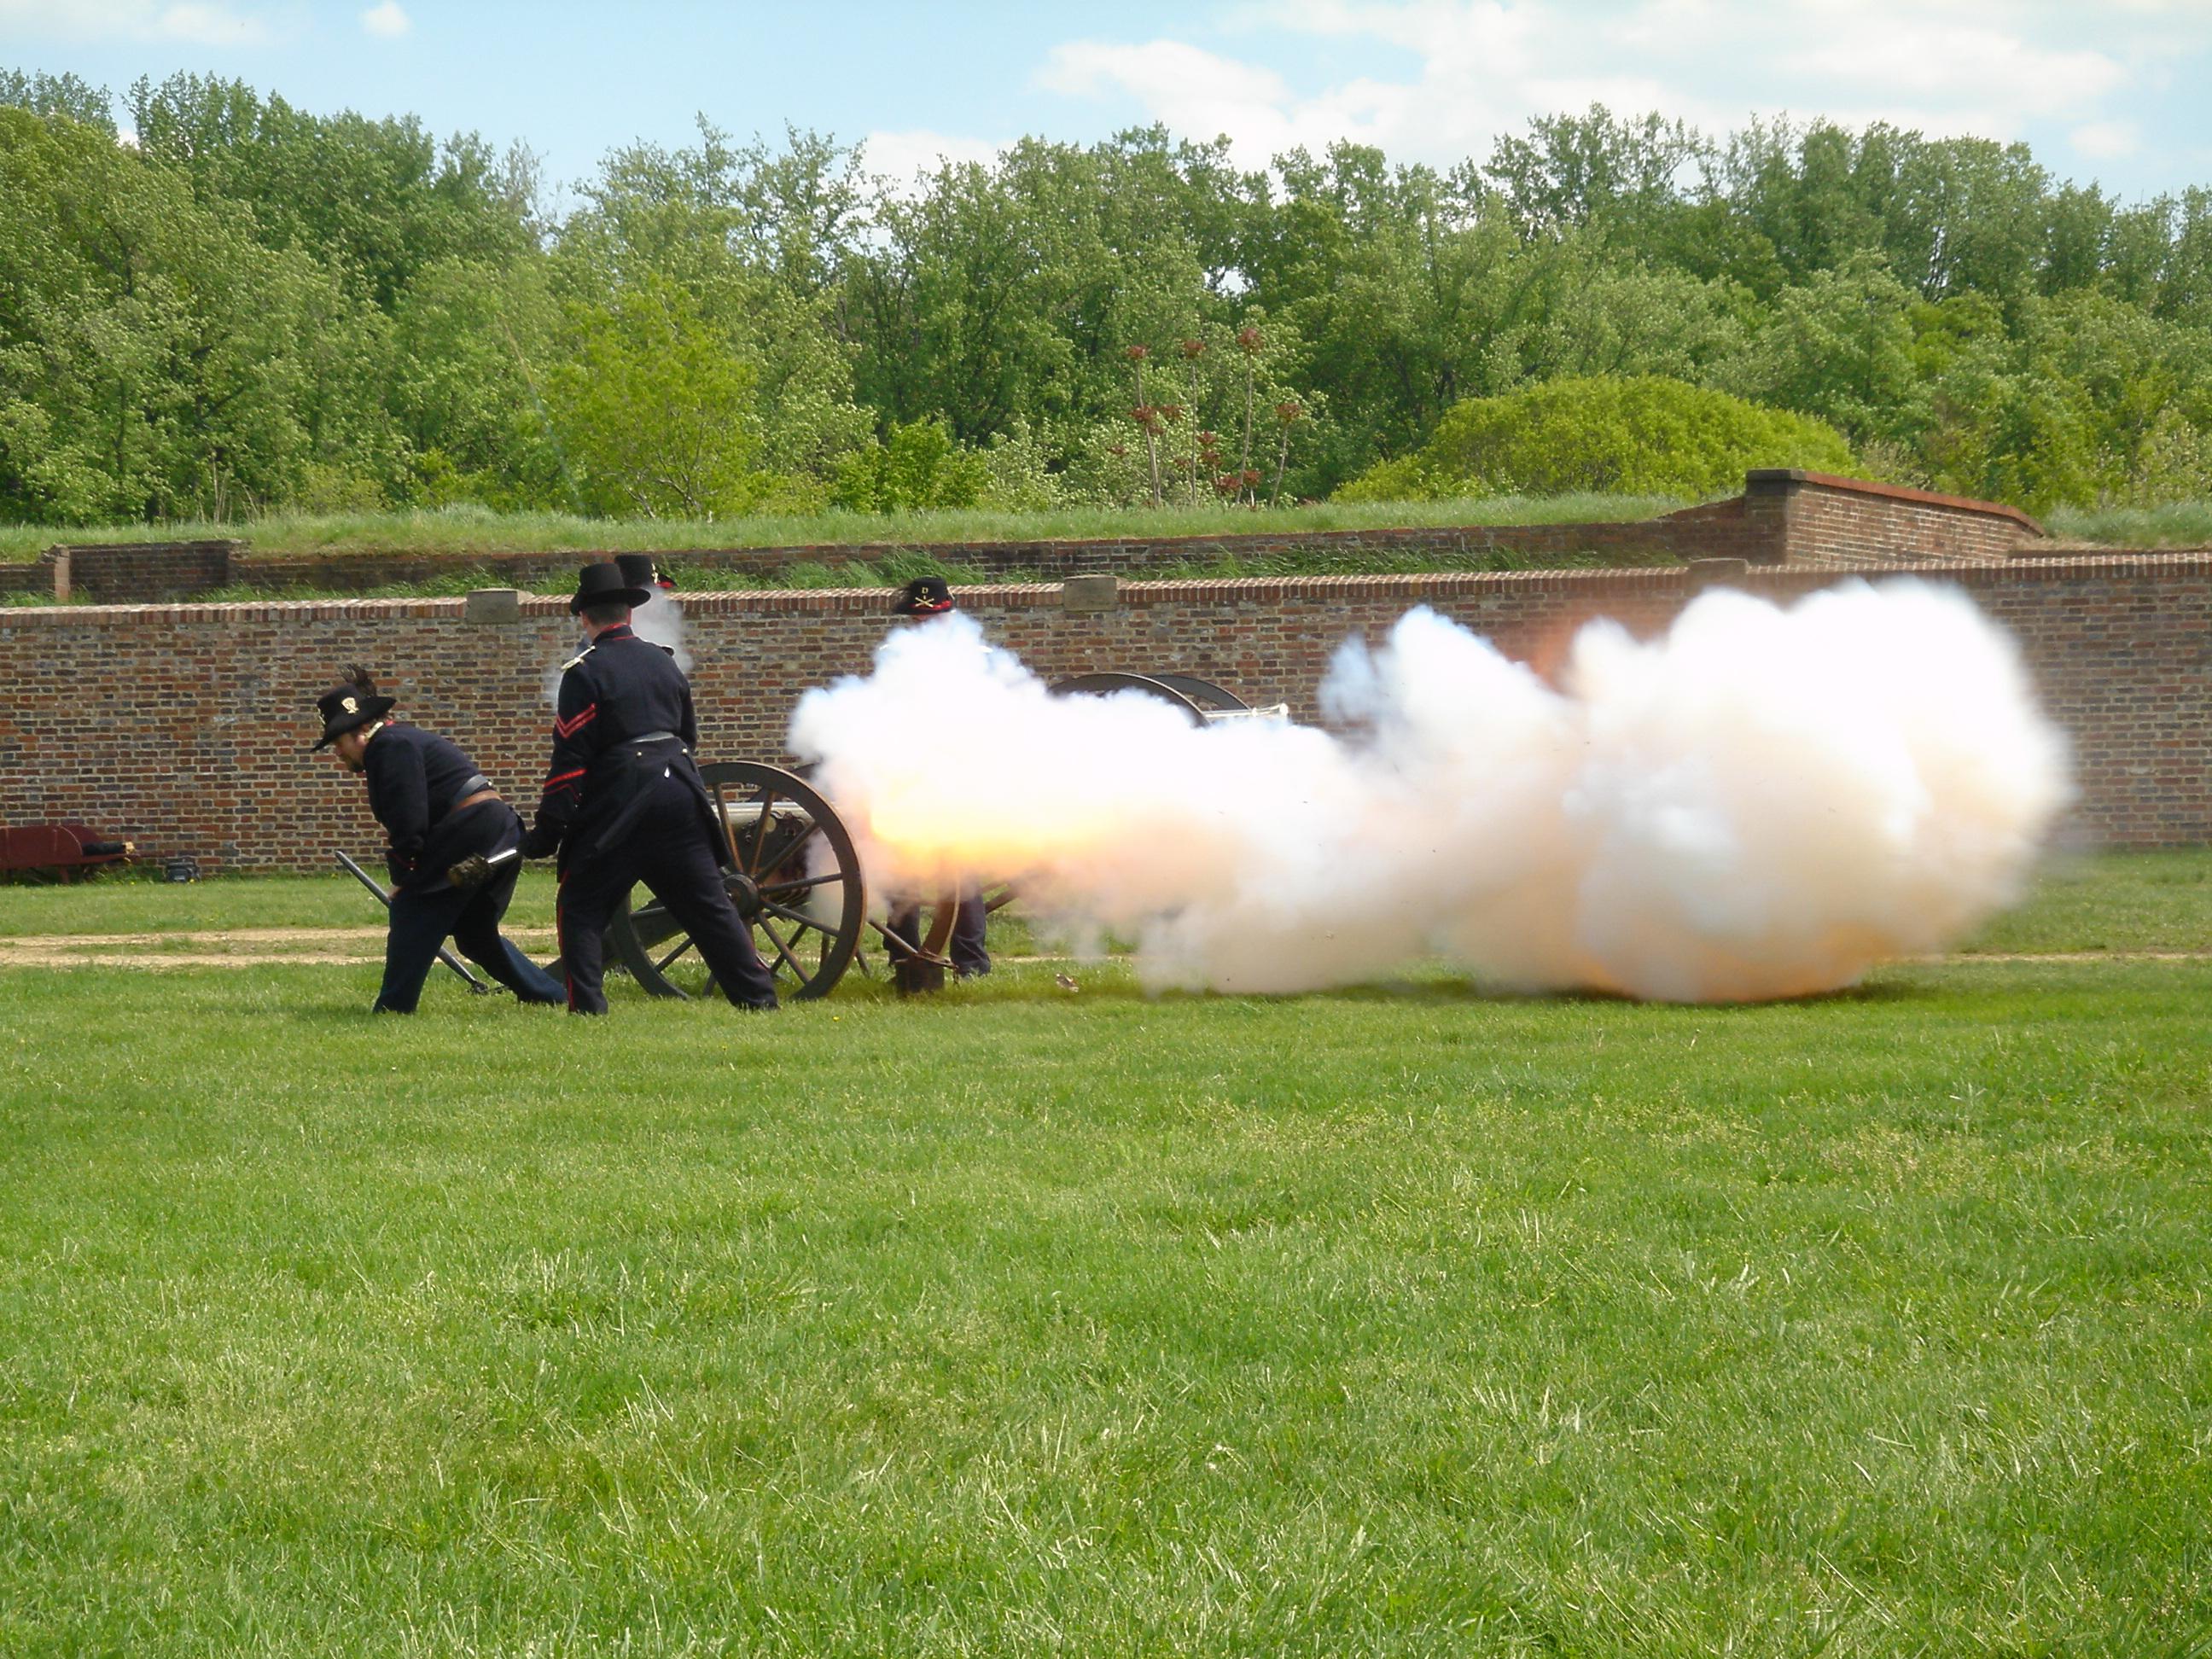 Fort Washington Volunteers firing a cannon